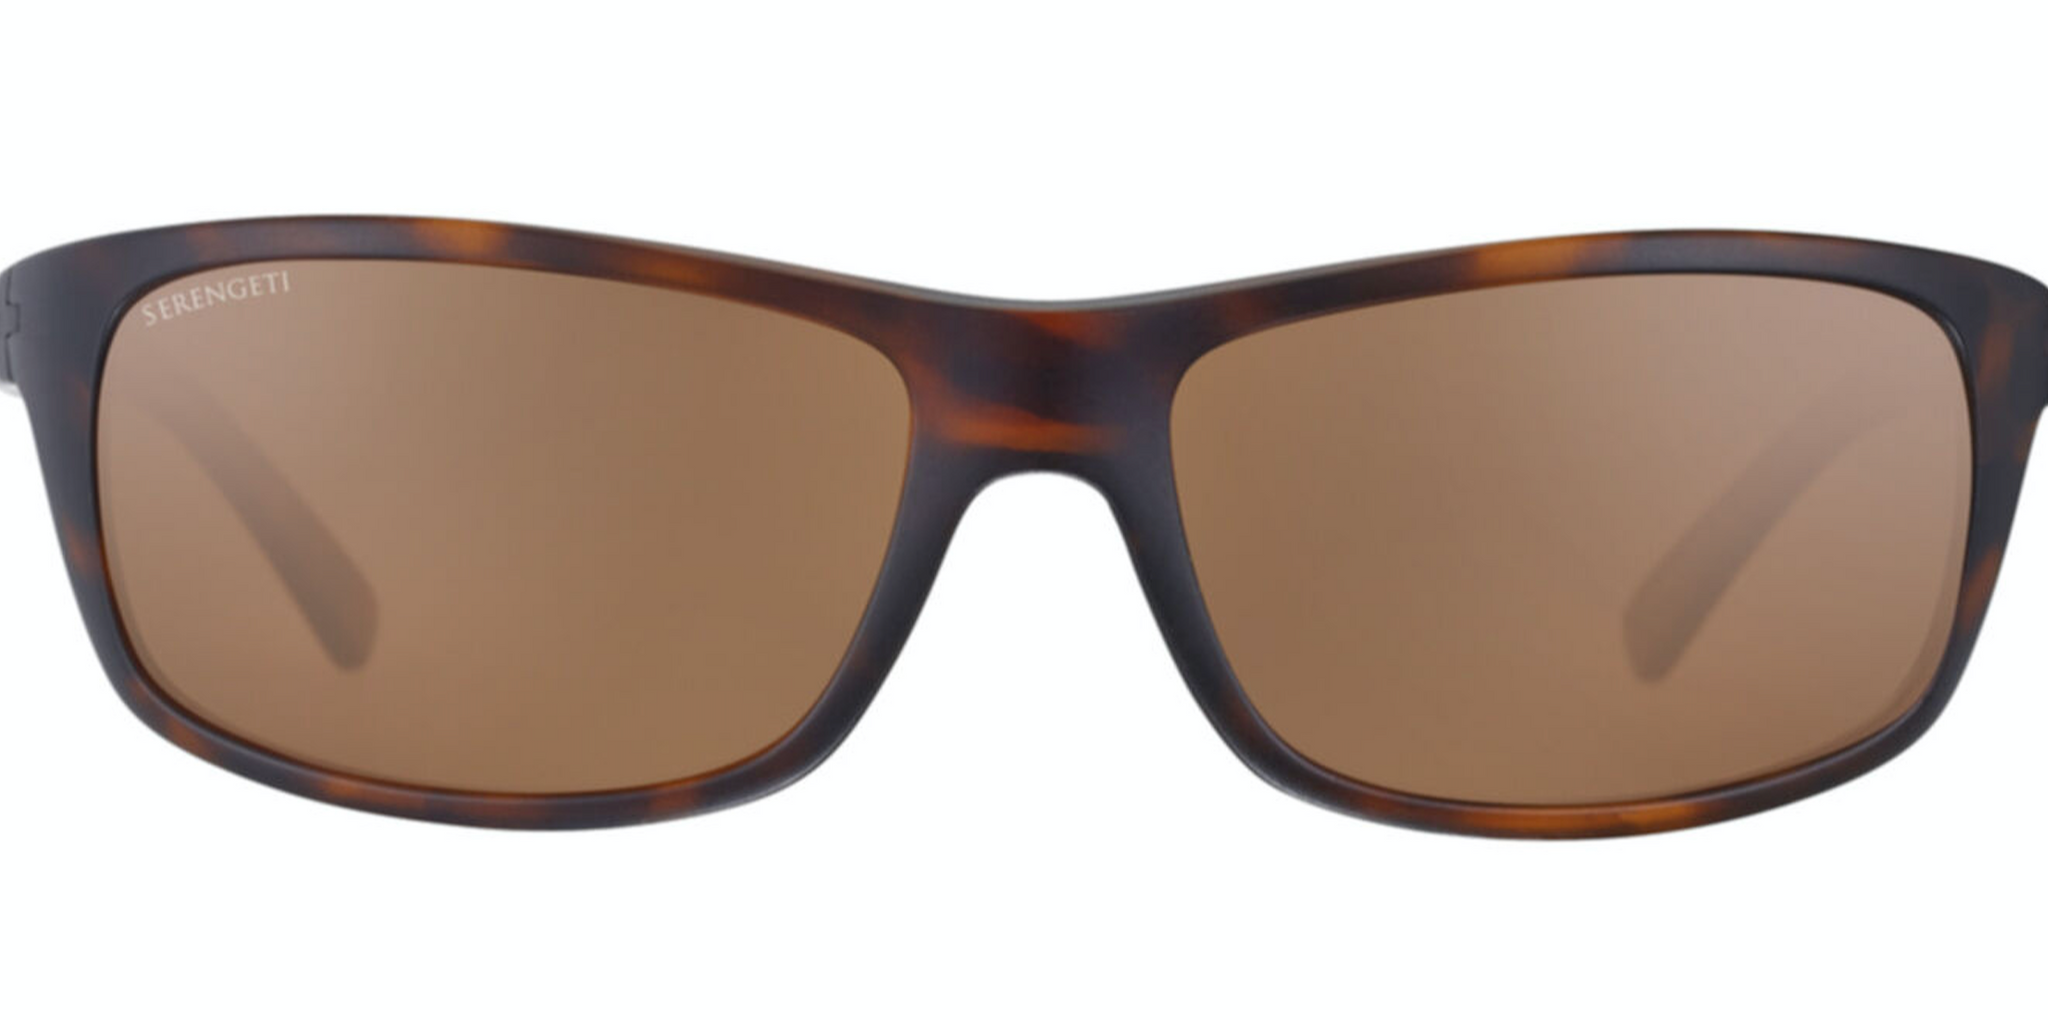 Serengeti Bormio Sunglasses -MODELS: 8990, 8165, 8166, 8167, 8168 - Flight Sunglasses